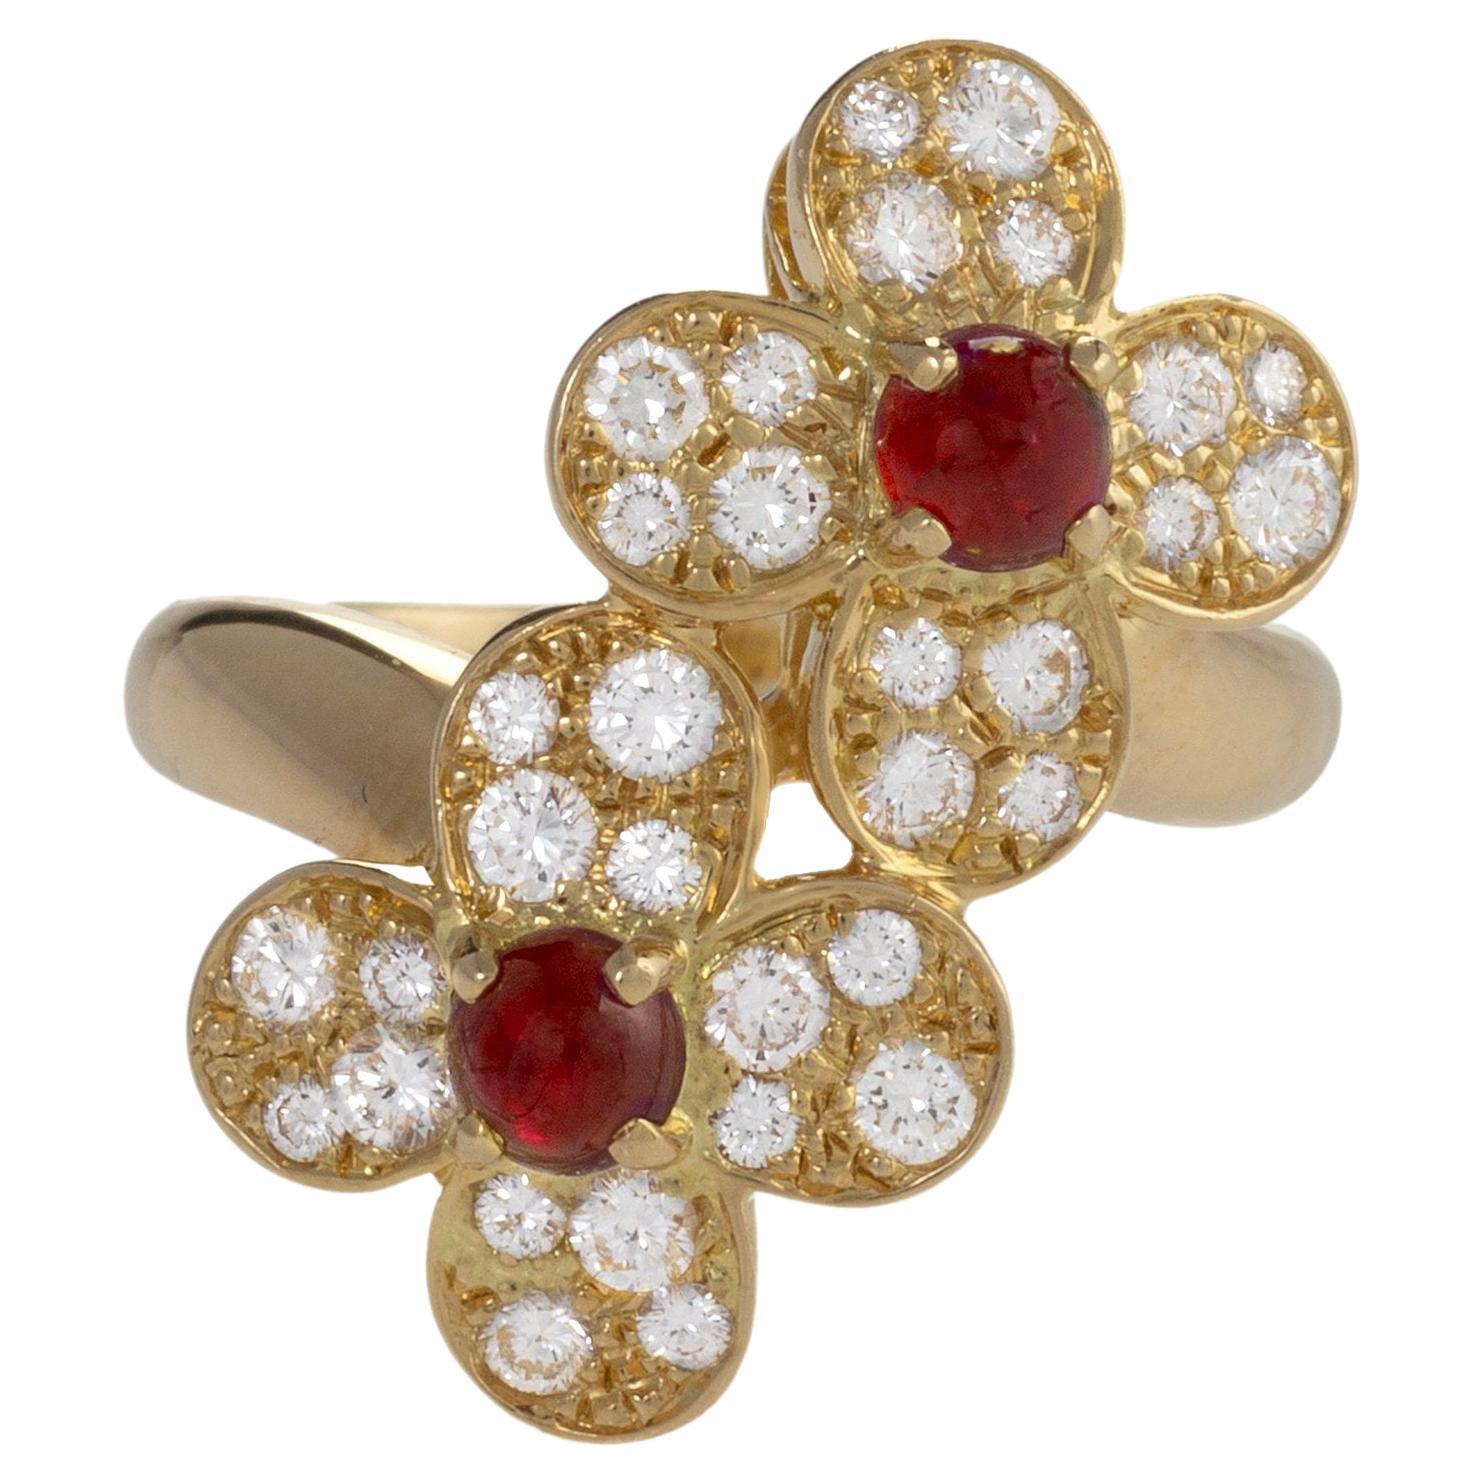 Van Cleef & Arpels Contemporary Ruby and Diamond Trefle Ring (bague à rubis et diamants)